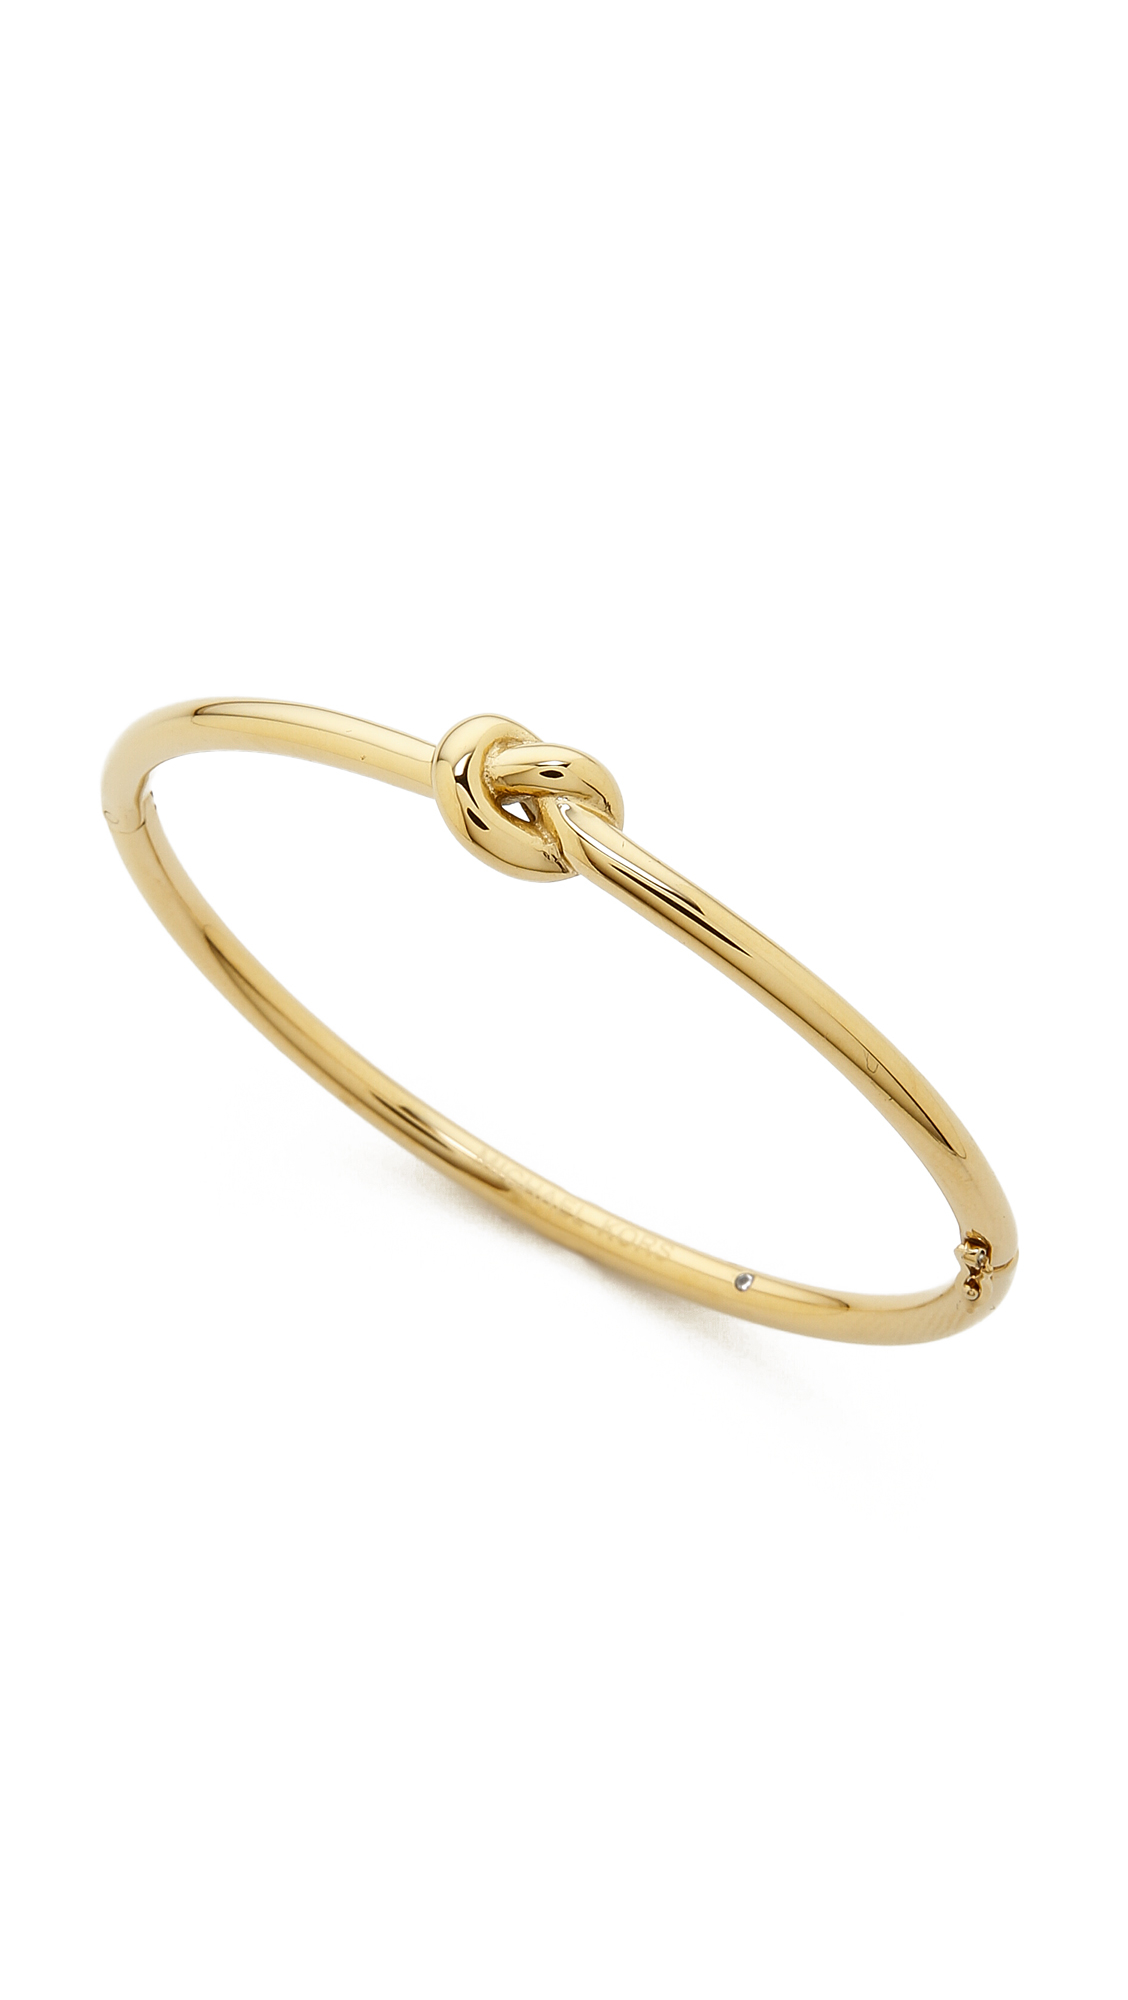 Michael Kors Knot Hinge Bracelet - Gold 